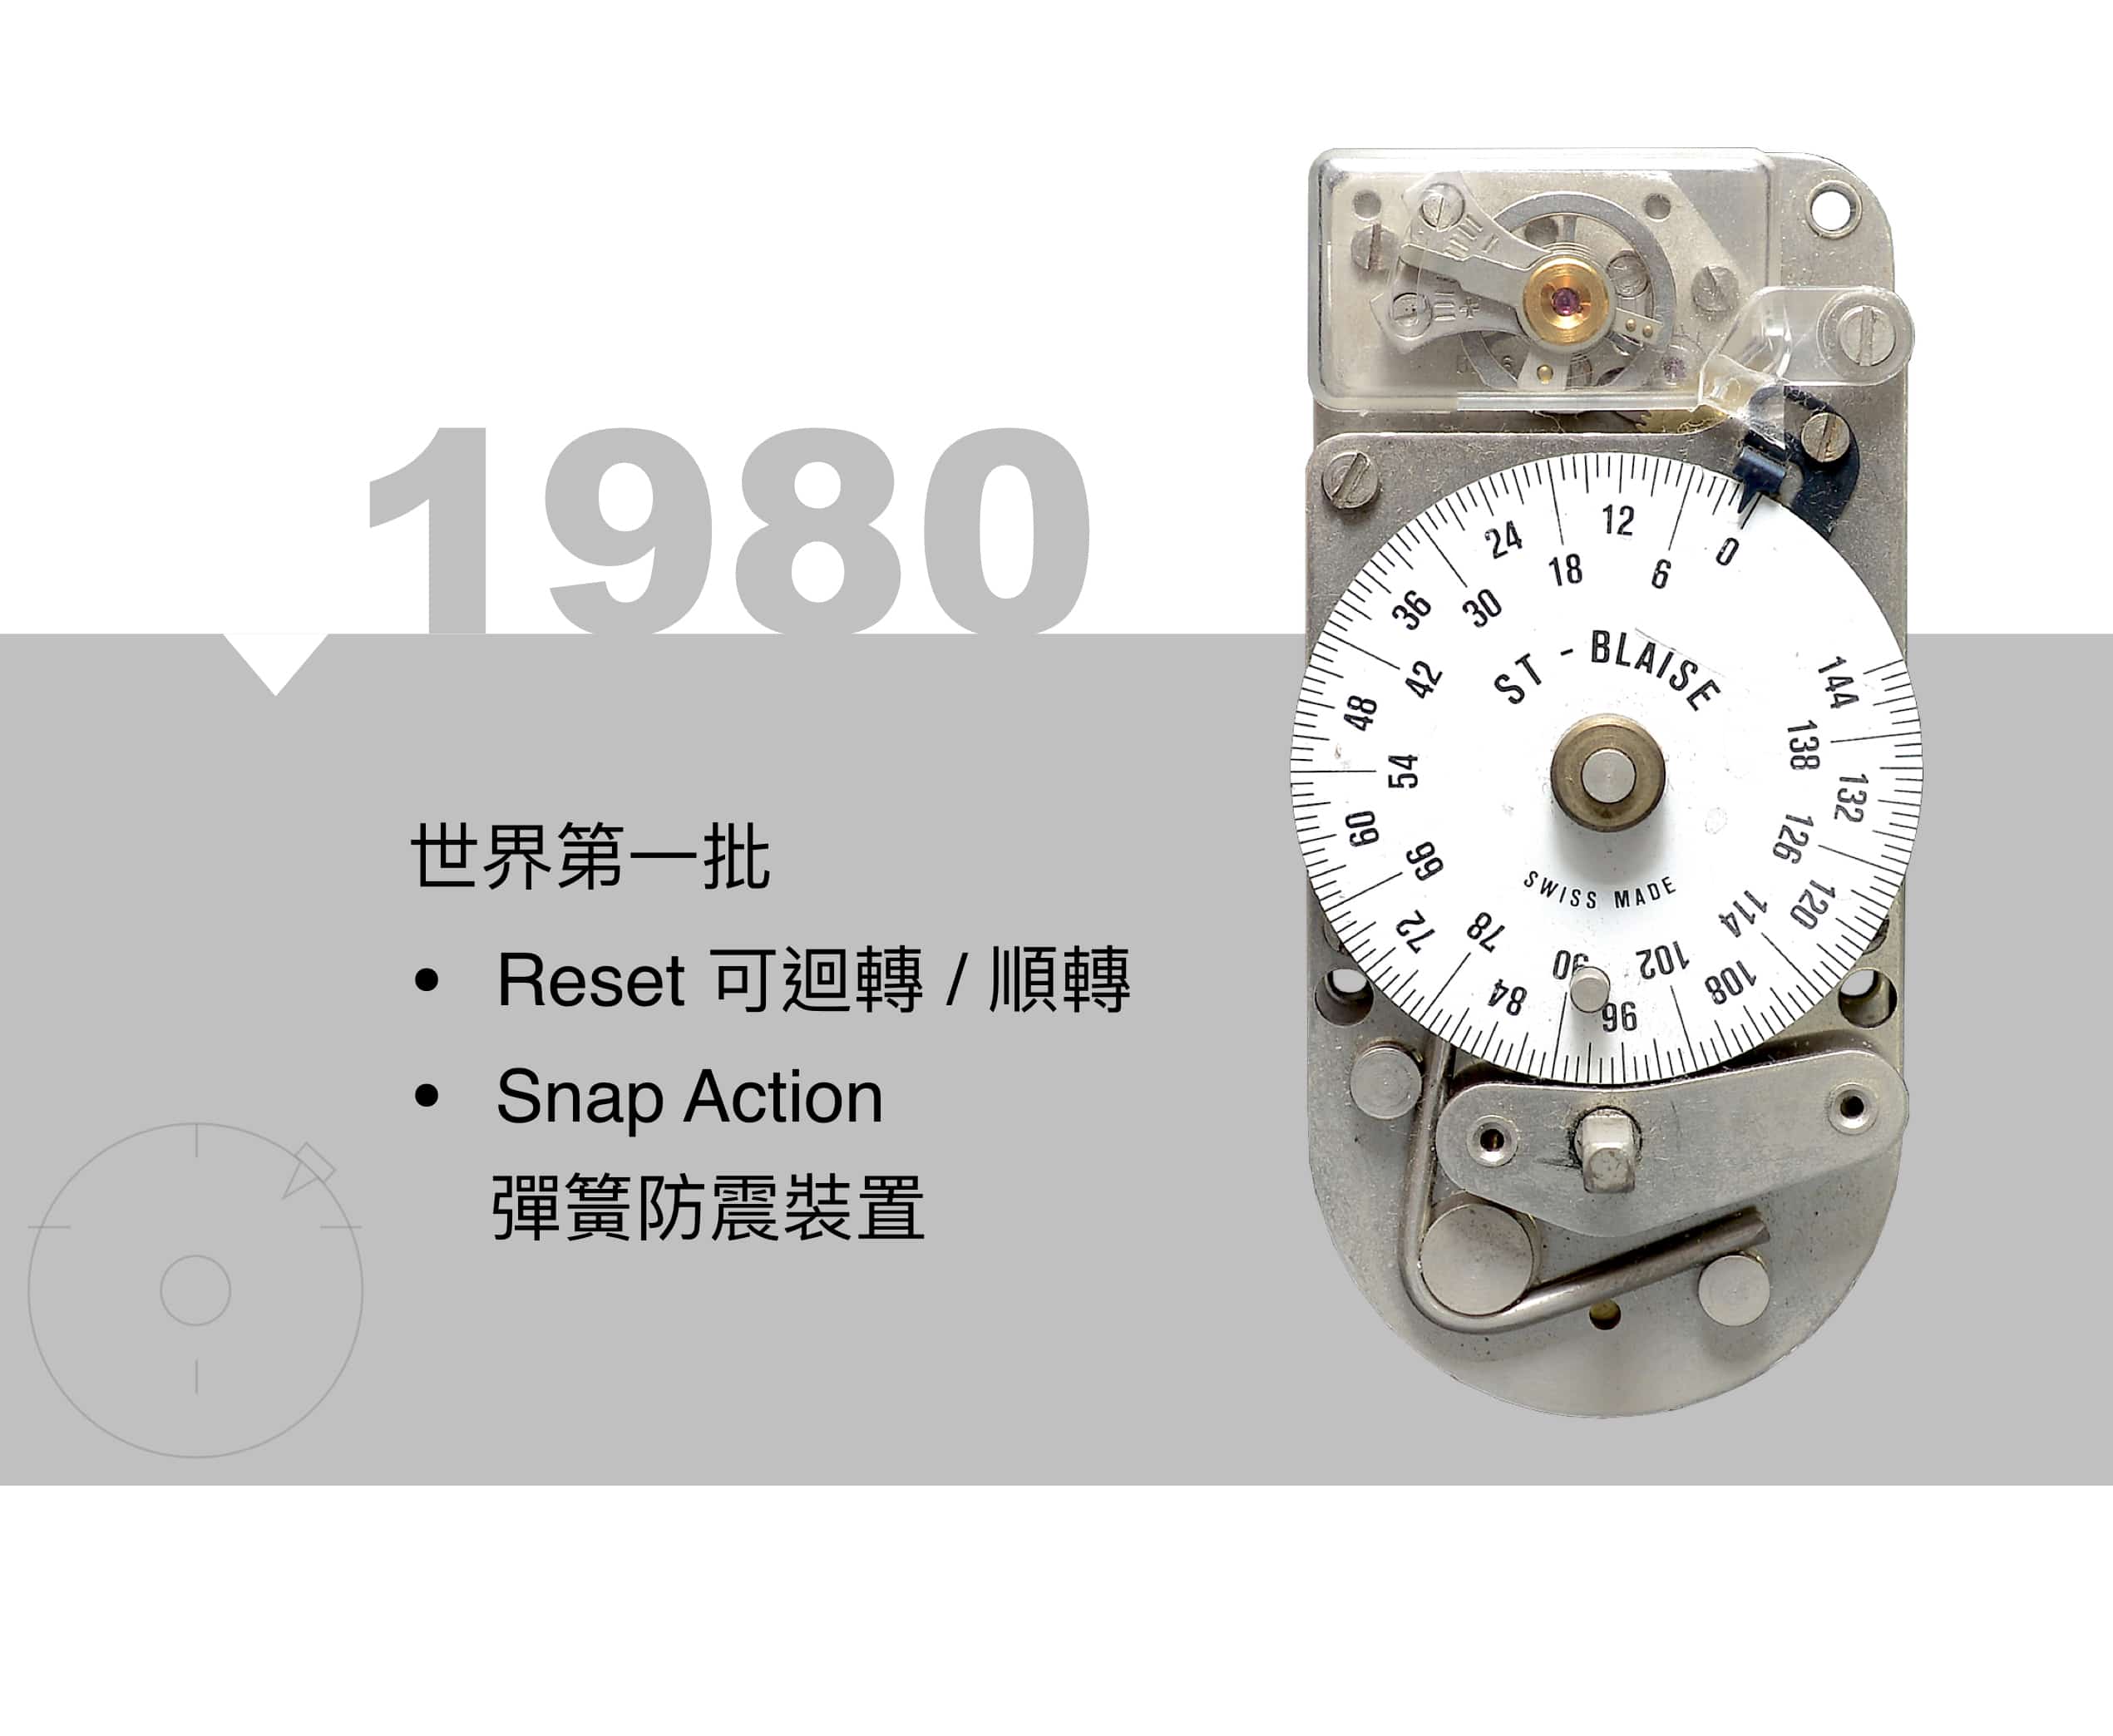 STB timeline 1980 世界第一批 時間鎖 reset 可迴轉 順轉 snap action 彈簧防震裝置